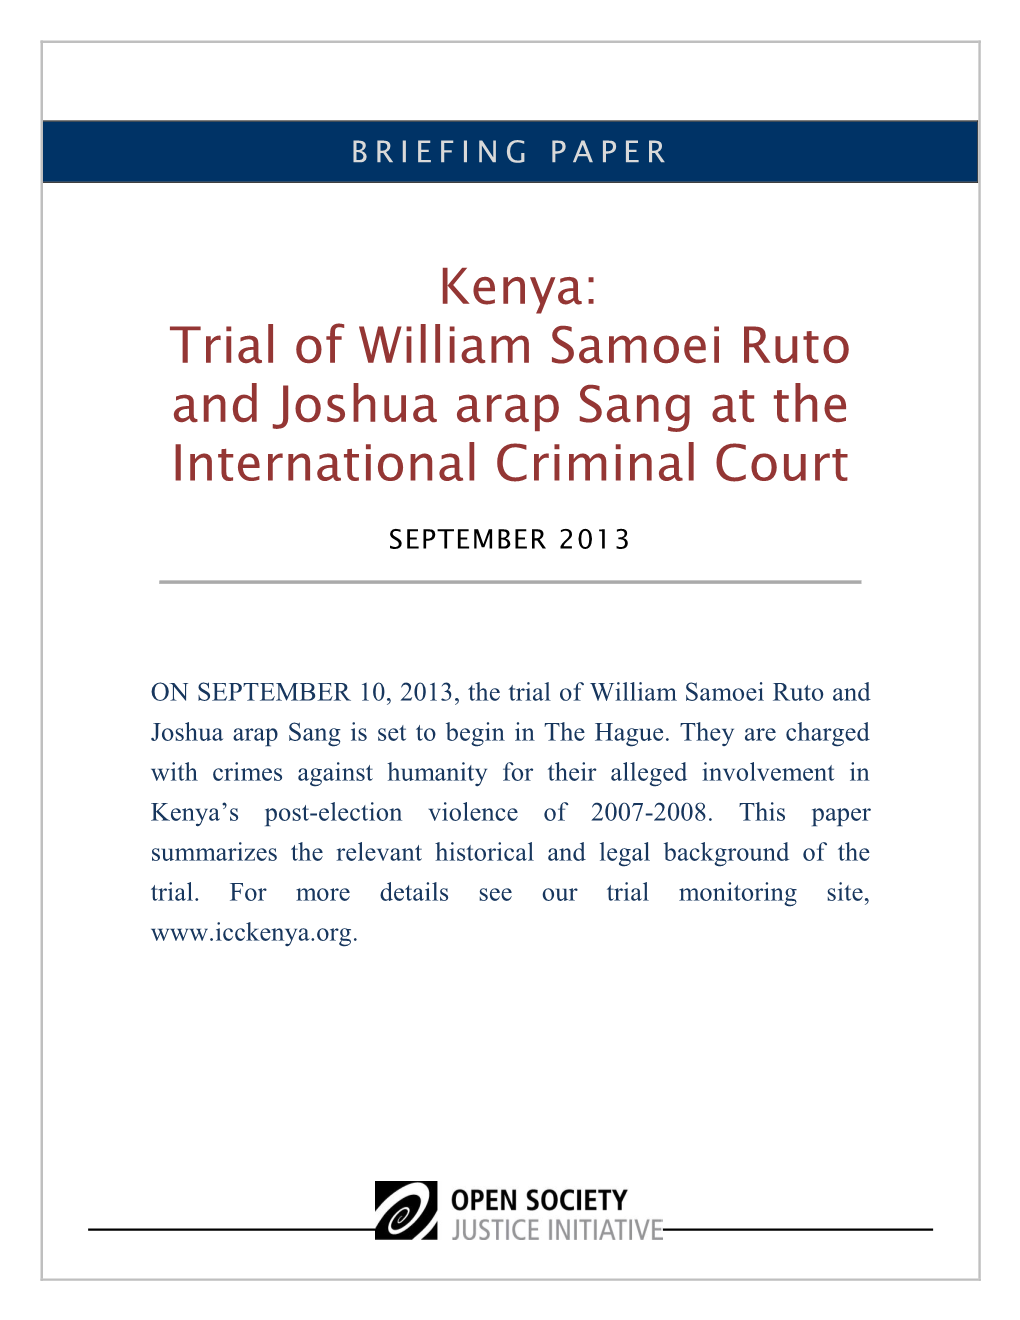 Kenya: Trial of William Samoei Ruto and Joshua Arap Sang at the International Criminal Court